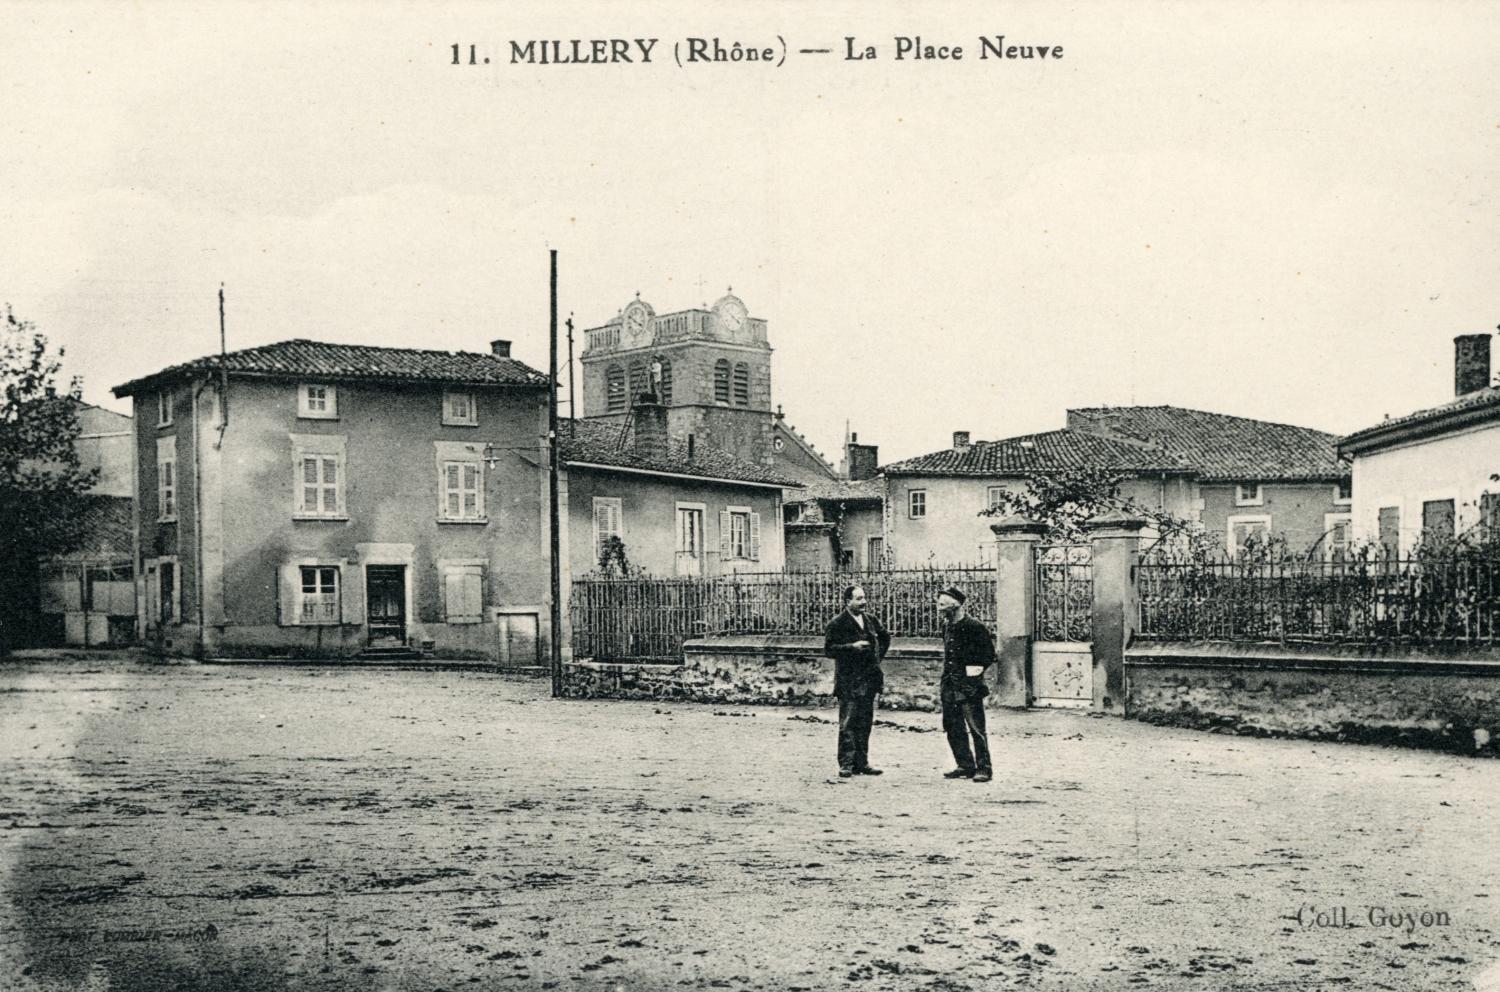 Millery (Rhône). - La Place Neuve